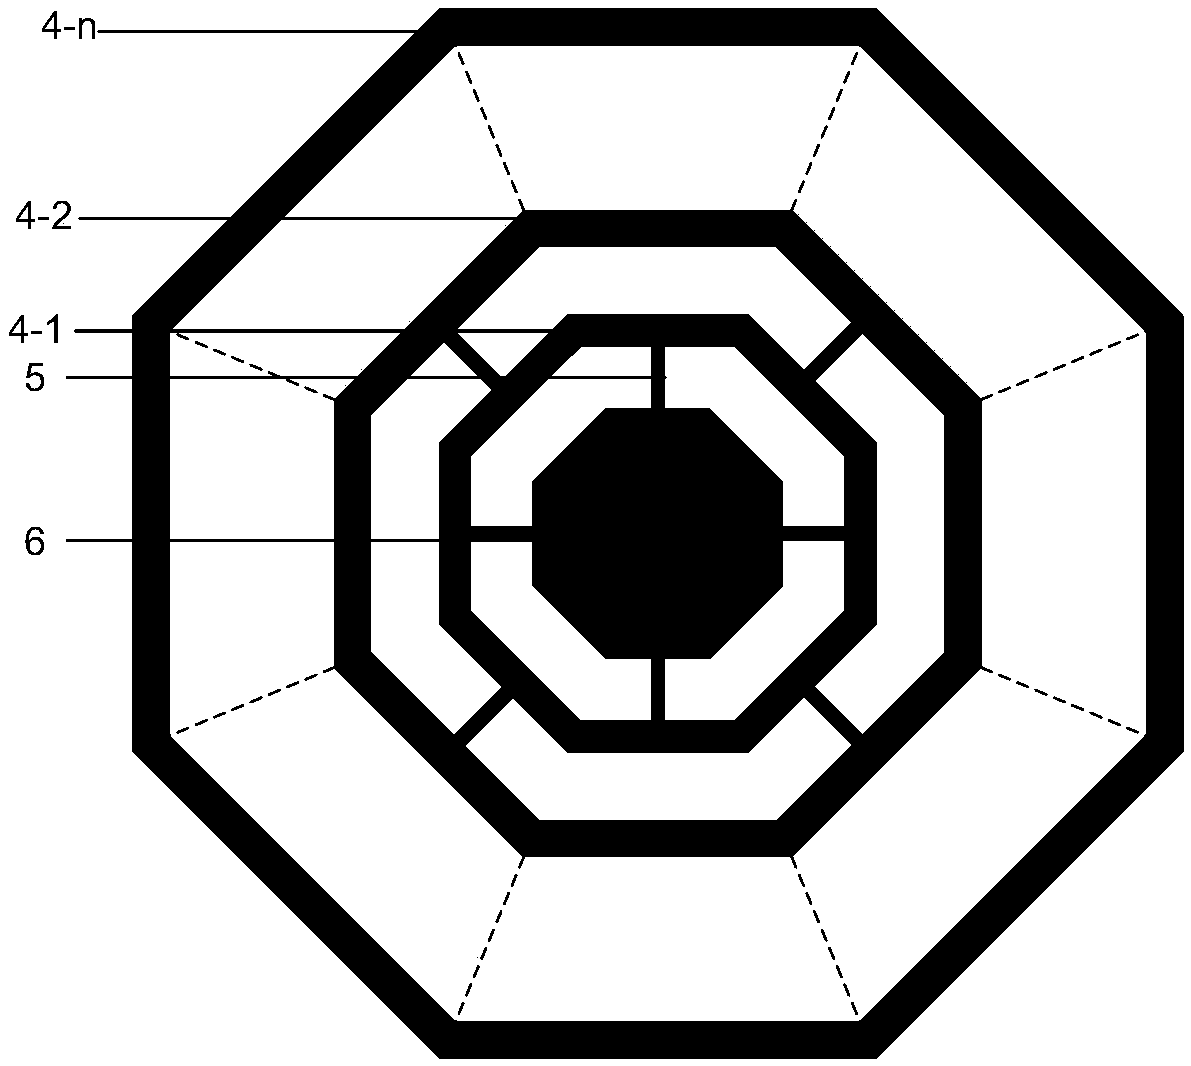 Novel regular octagonal annular resonant micro-mechanical gyroscope